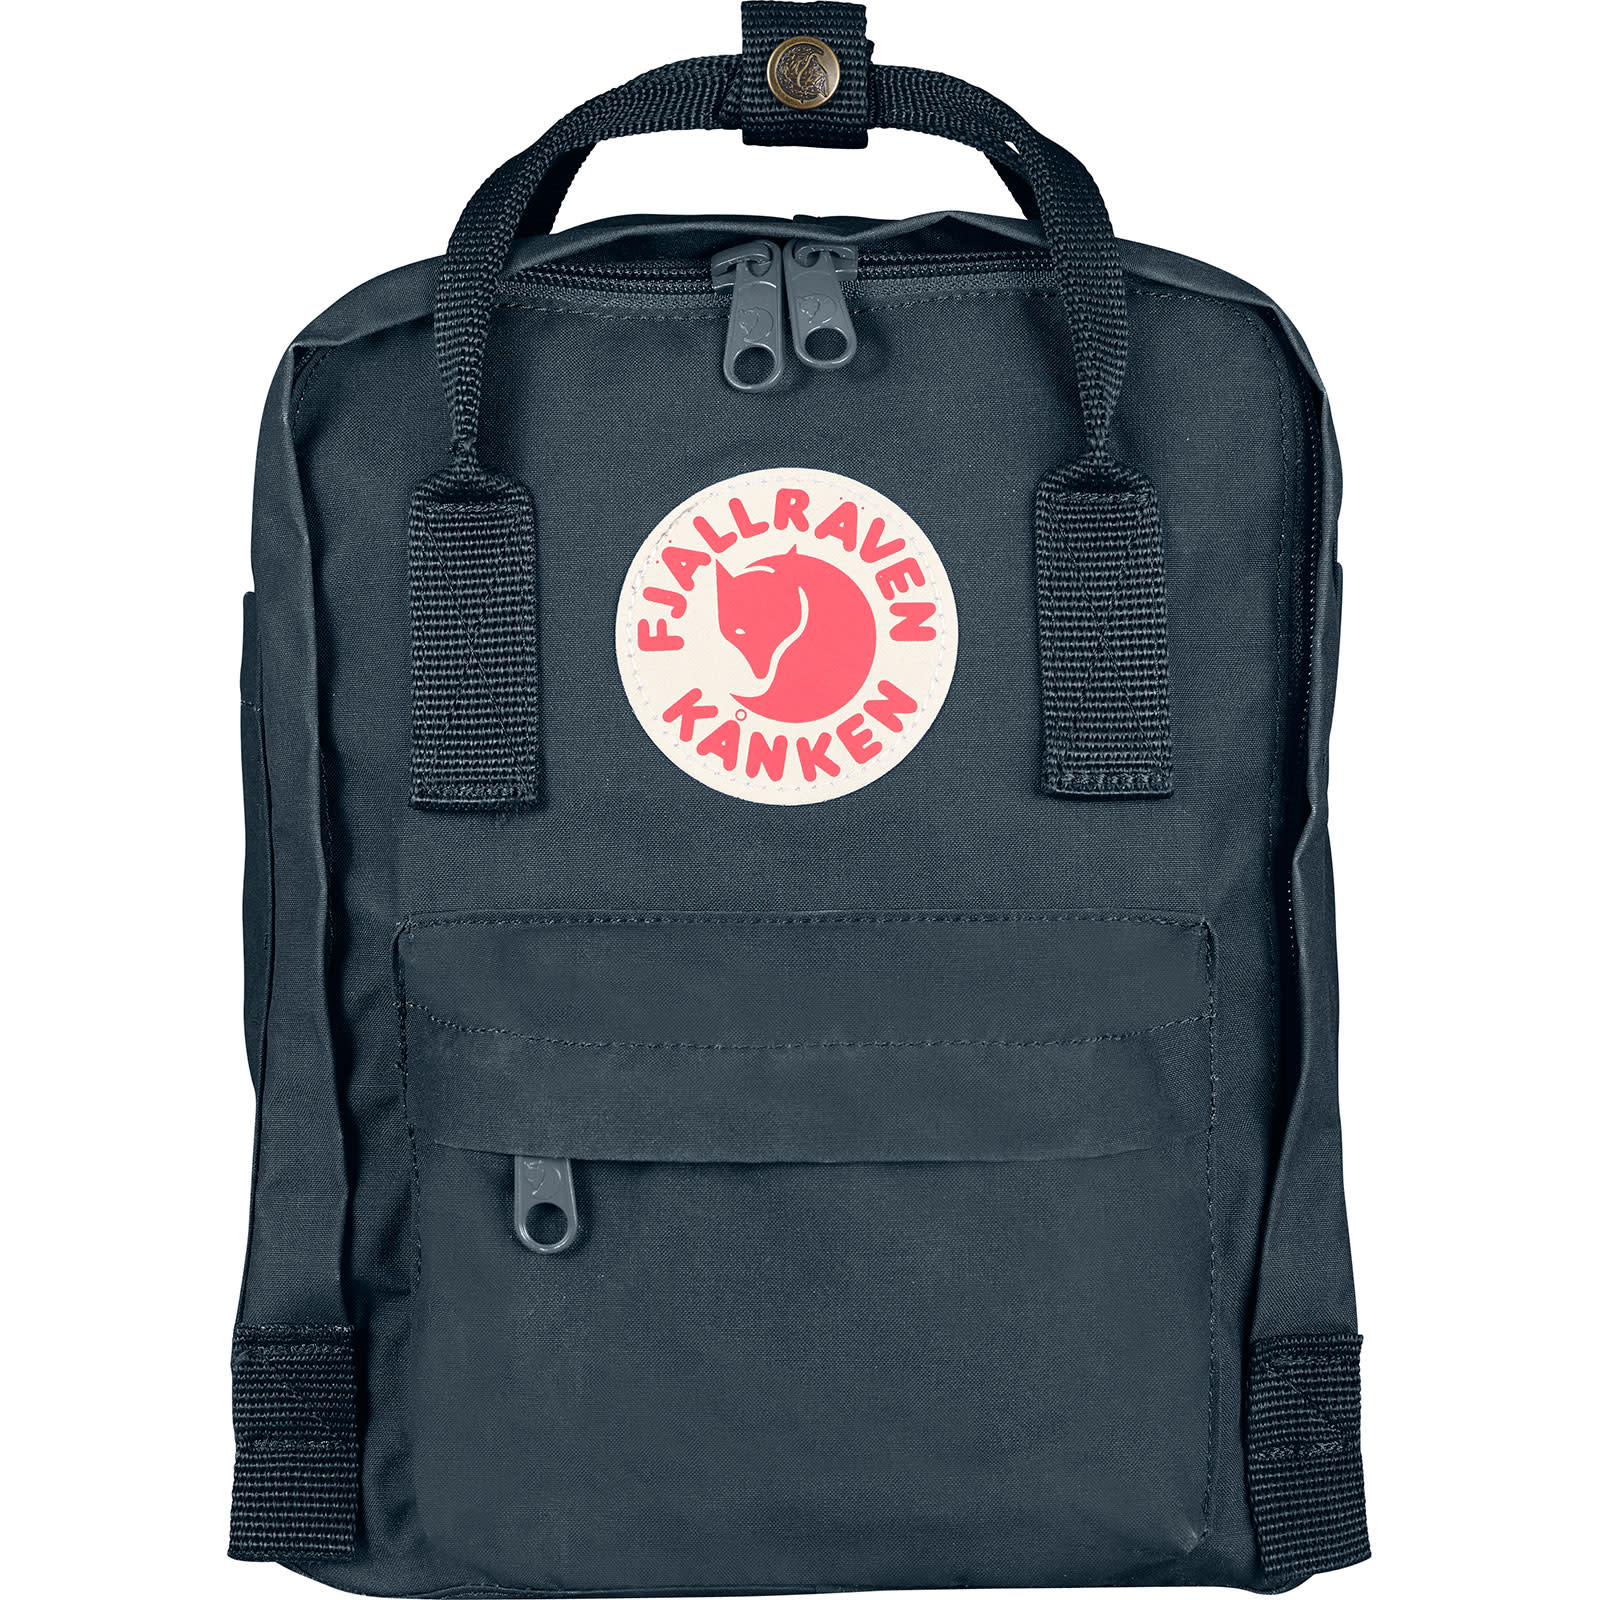 FJALLRAVEN Kånken Mini Backpack - BLACK